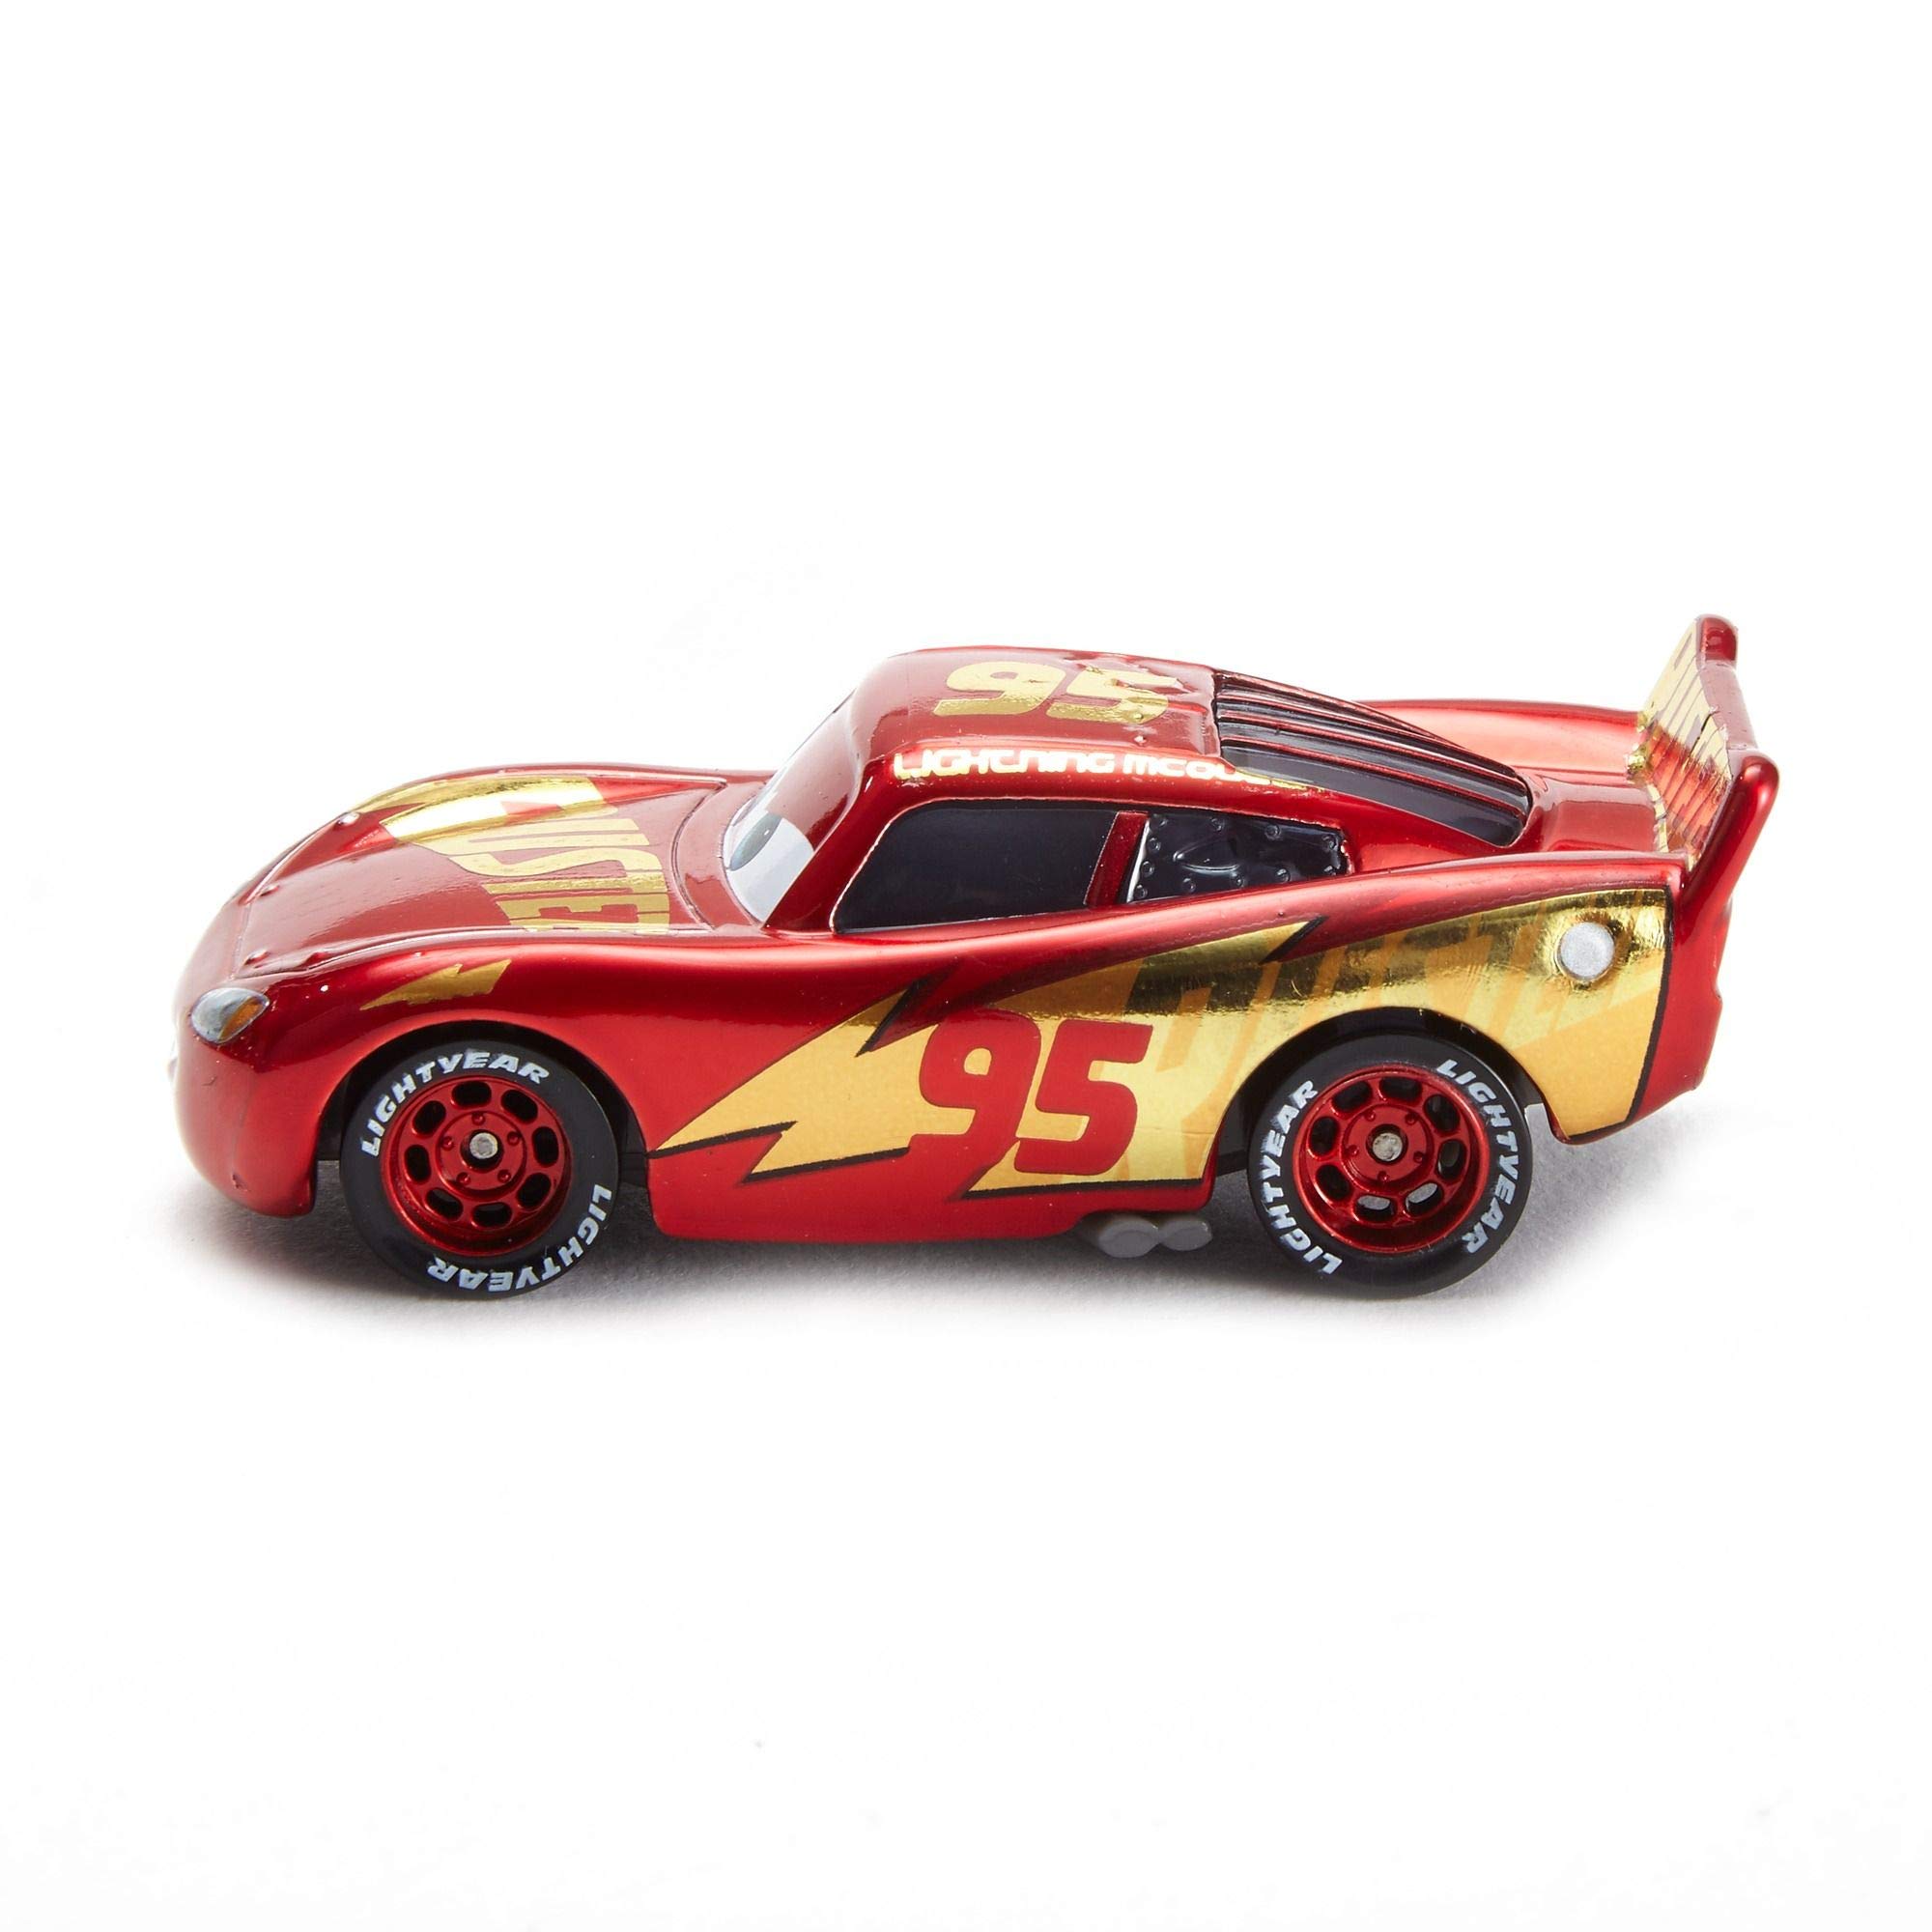 Pinewood Derby Car Design Plan - Lightning McQueen